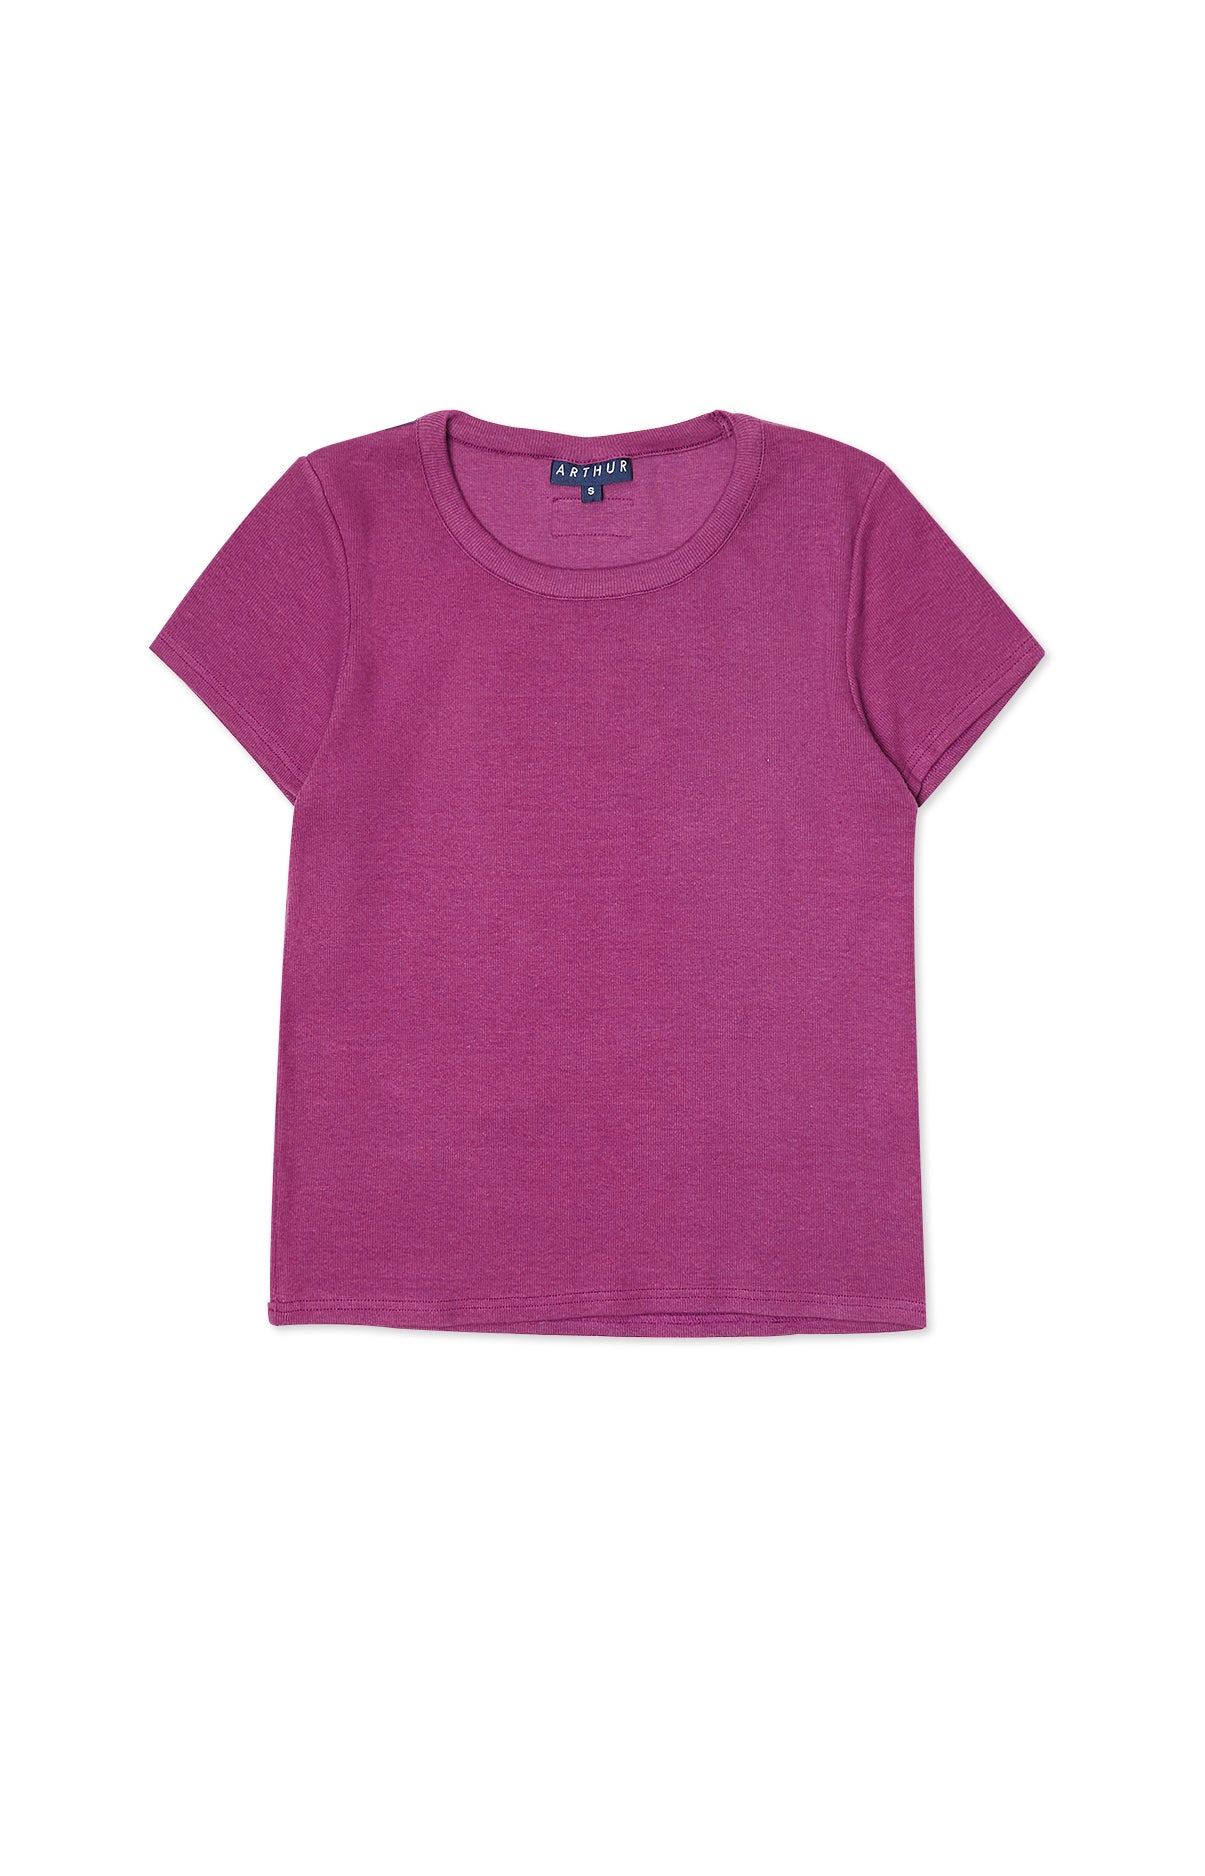 Tee Shirt Uni Violet 3